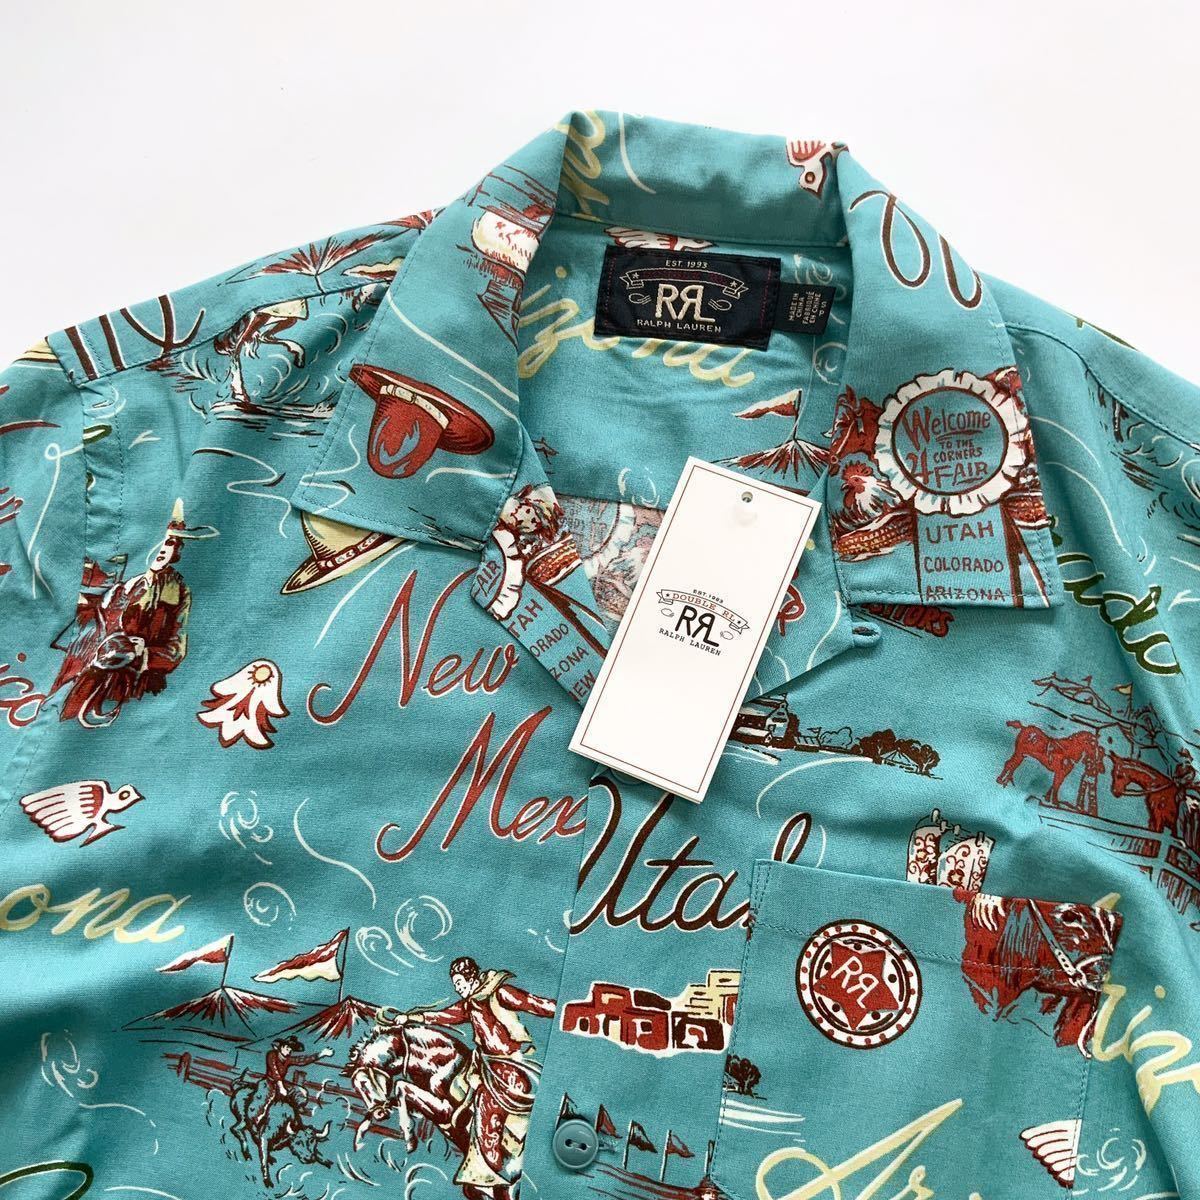  popular commodity 22SS new goods DOUBLE RL RRL print camp shirt Ralph Lauren RR L short sleeves aloha shirt S size 